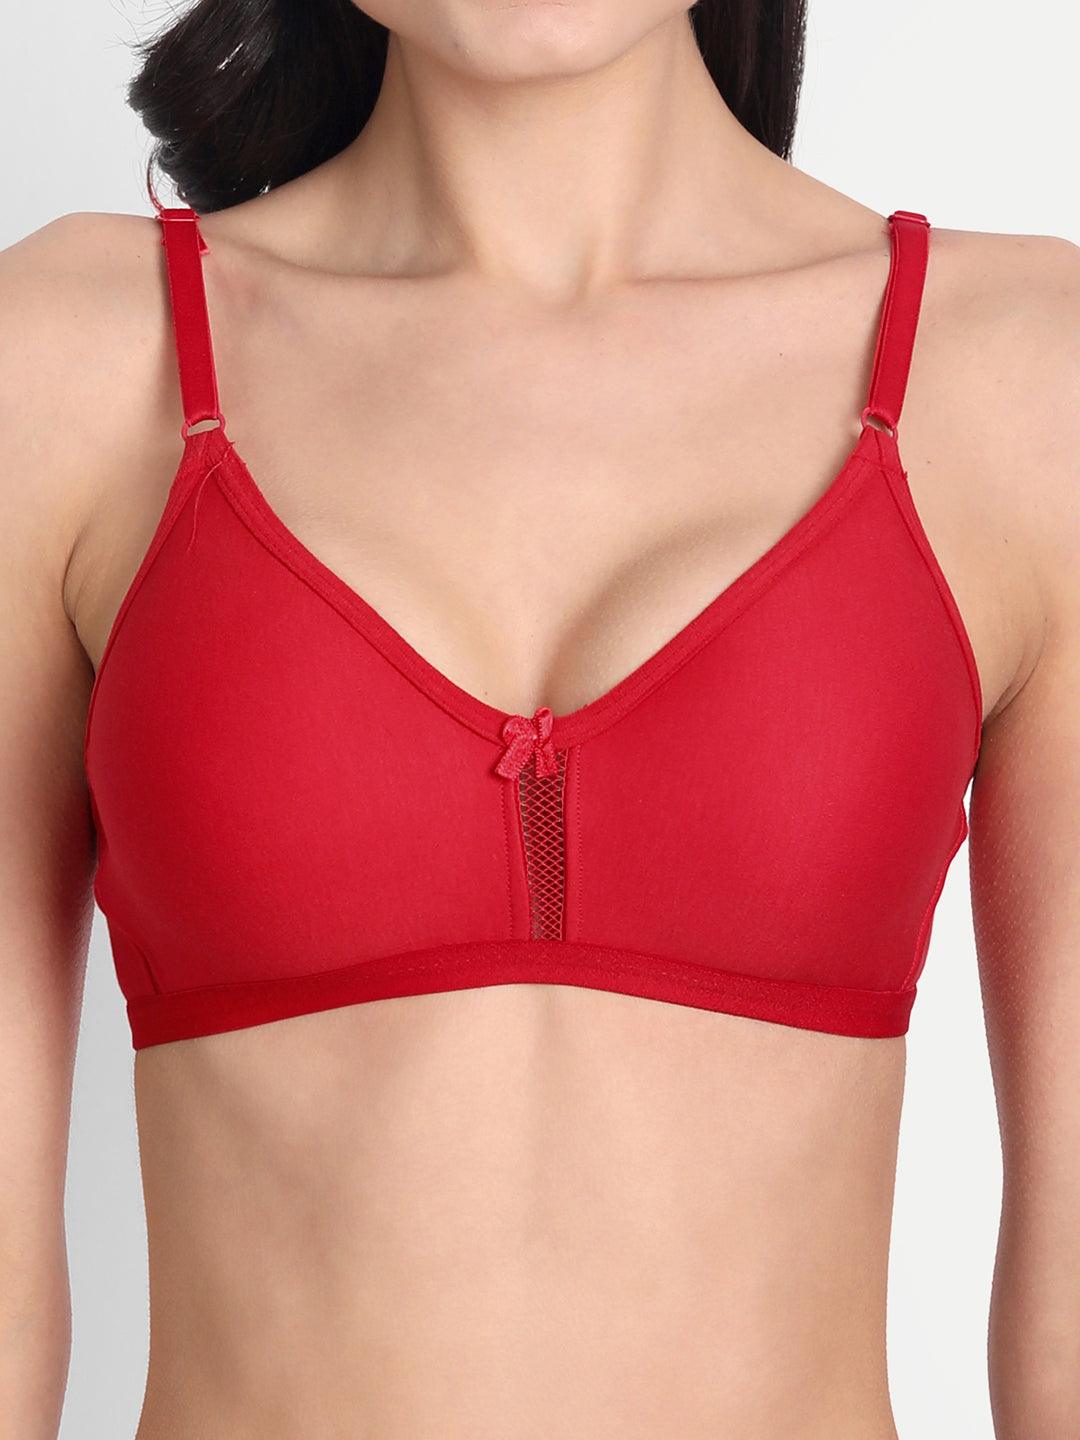 Cotton bras Women's Cotton Blend Seamless Non-Wired Adjustable